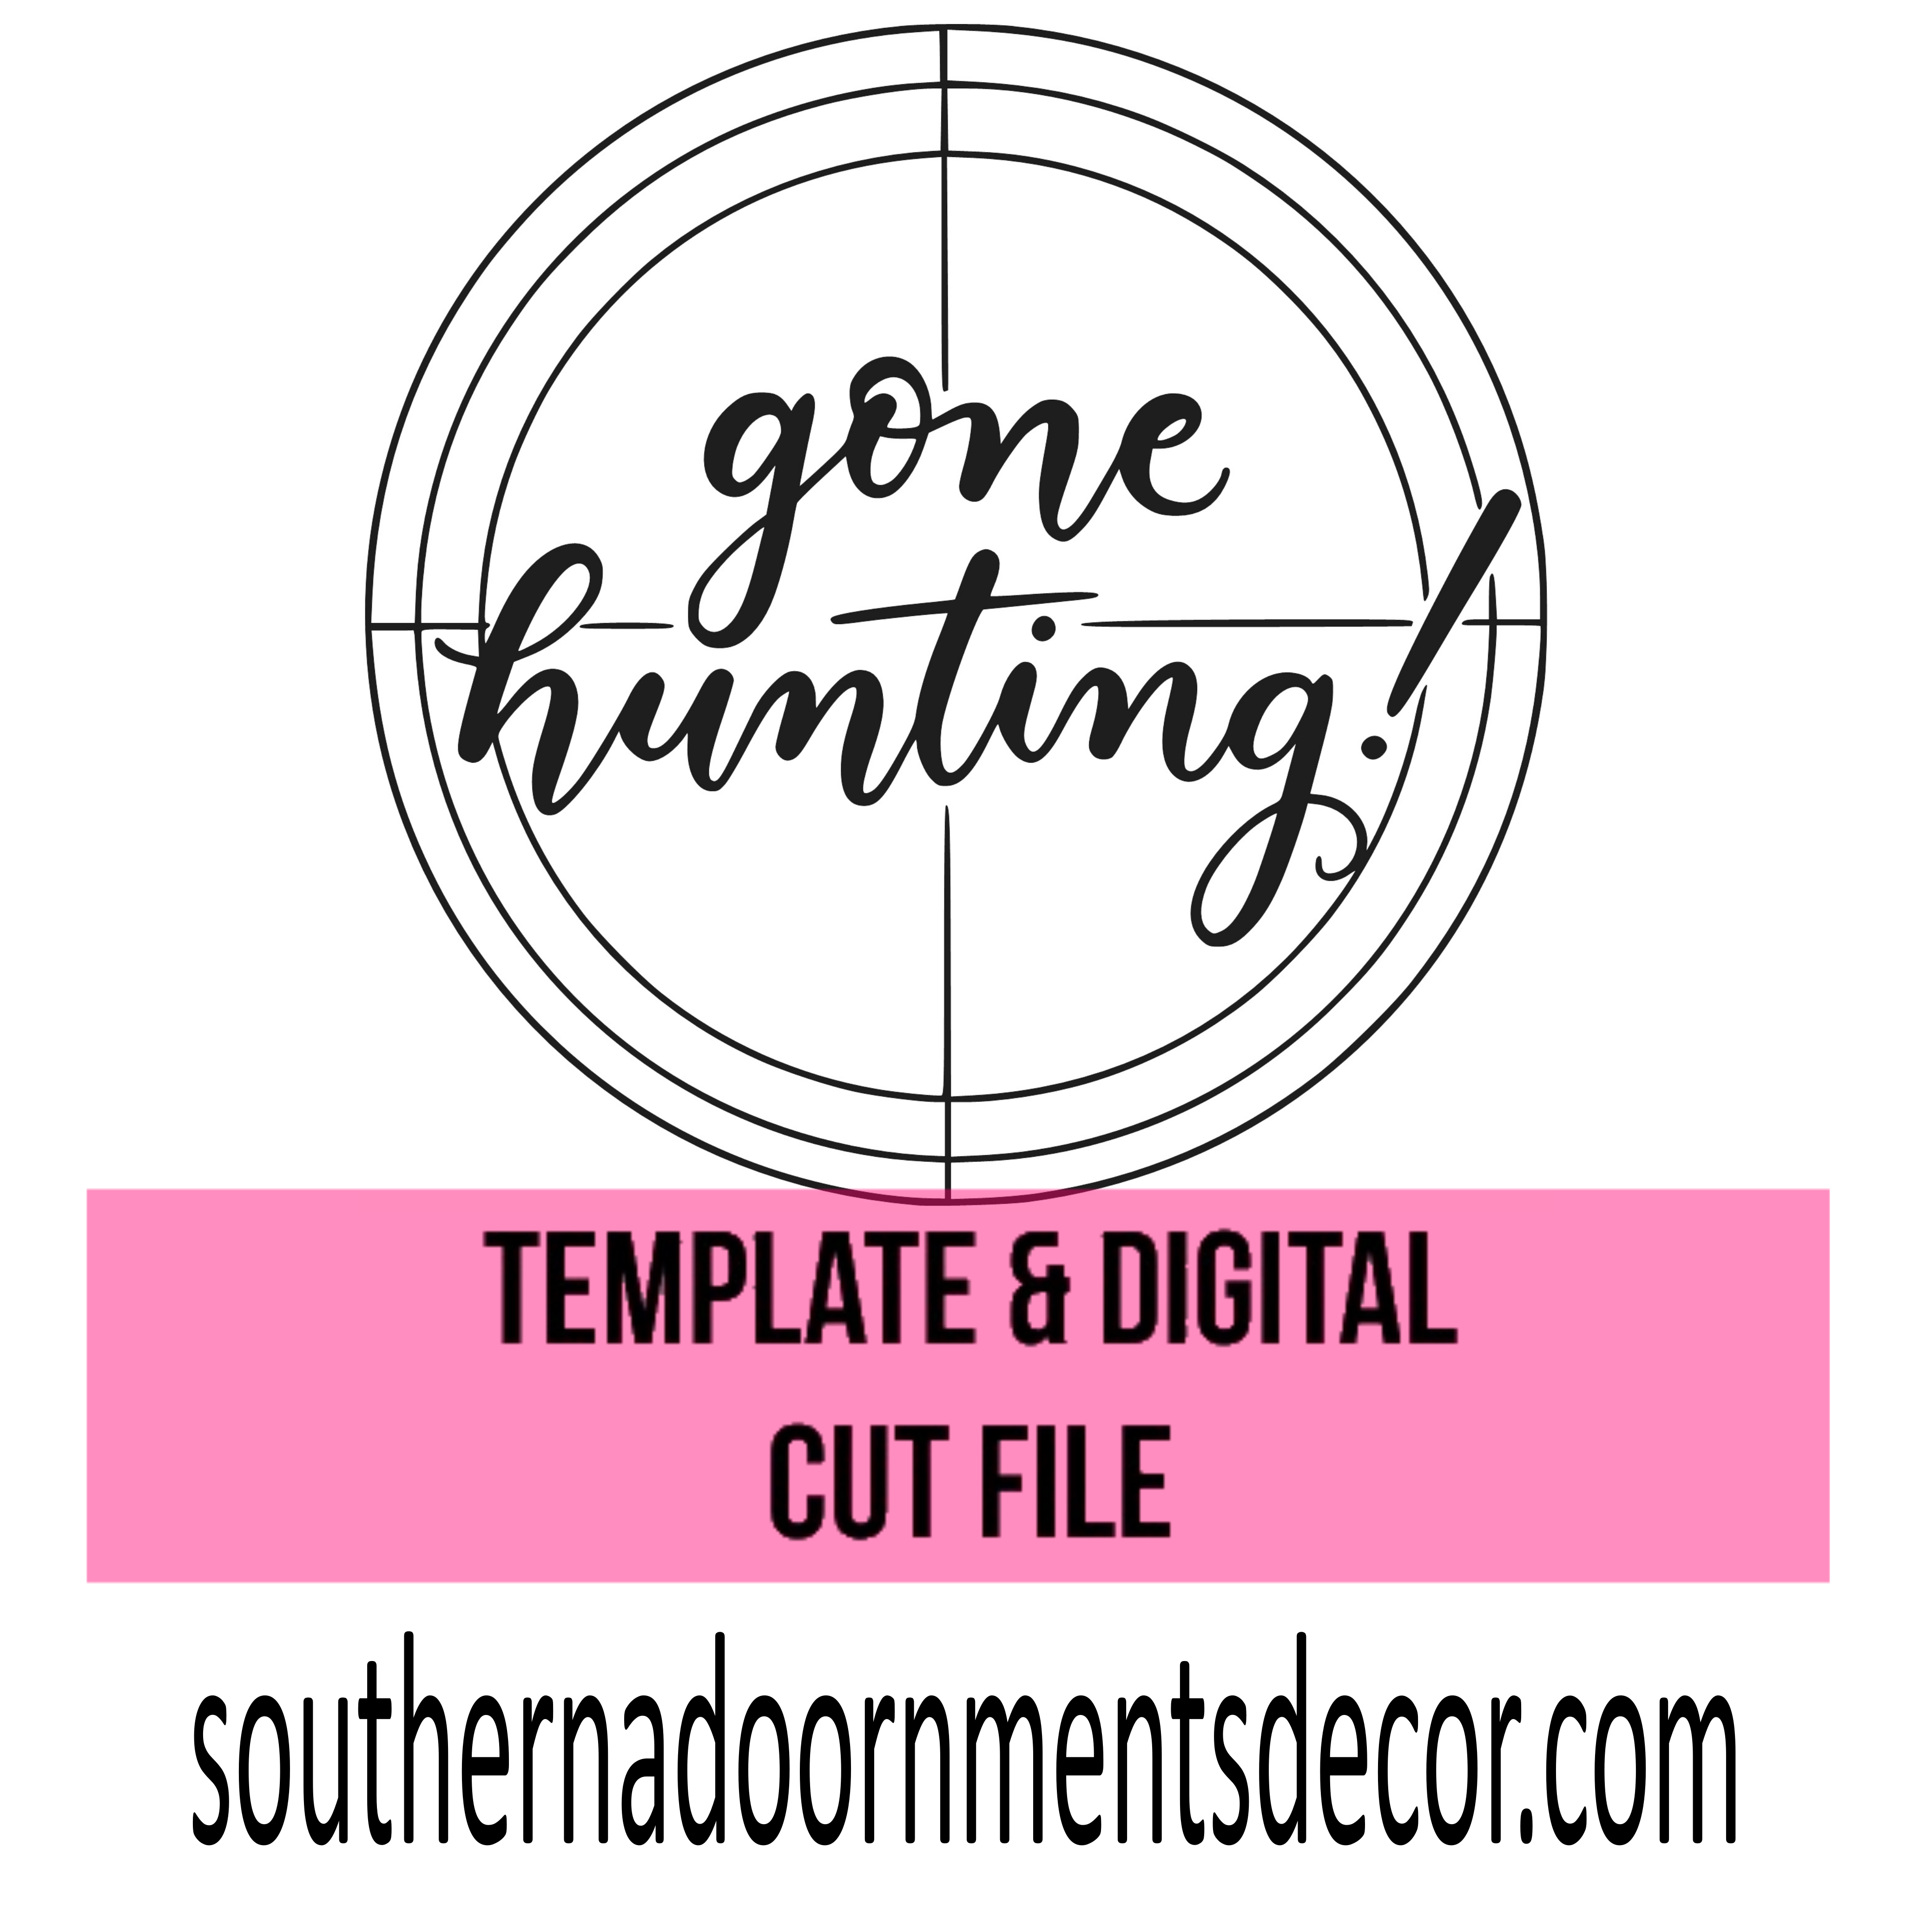 Gone Hunting Template & Digital Cut File